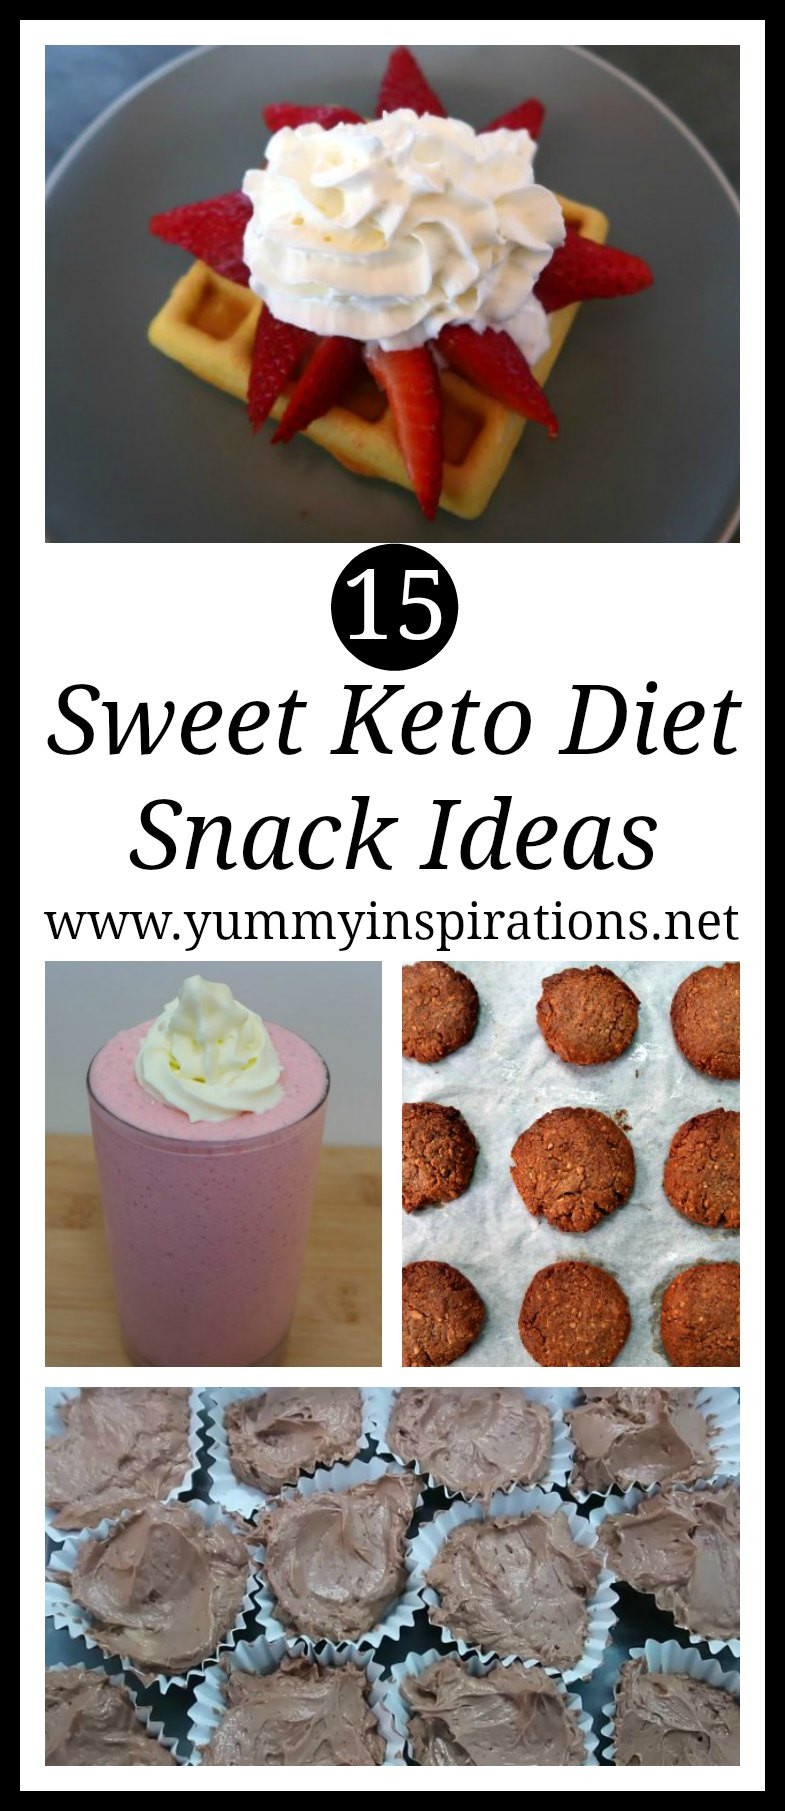 Keto Diet Snacks Low Carb
 15 Sweet Keto Snacks Easy Low Carb Diet Friendly Snack